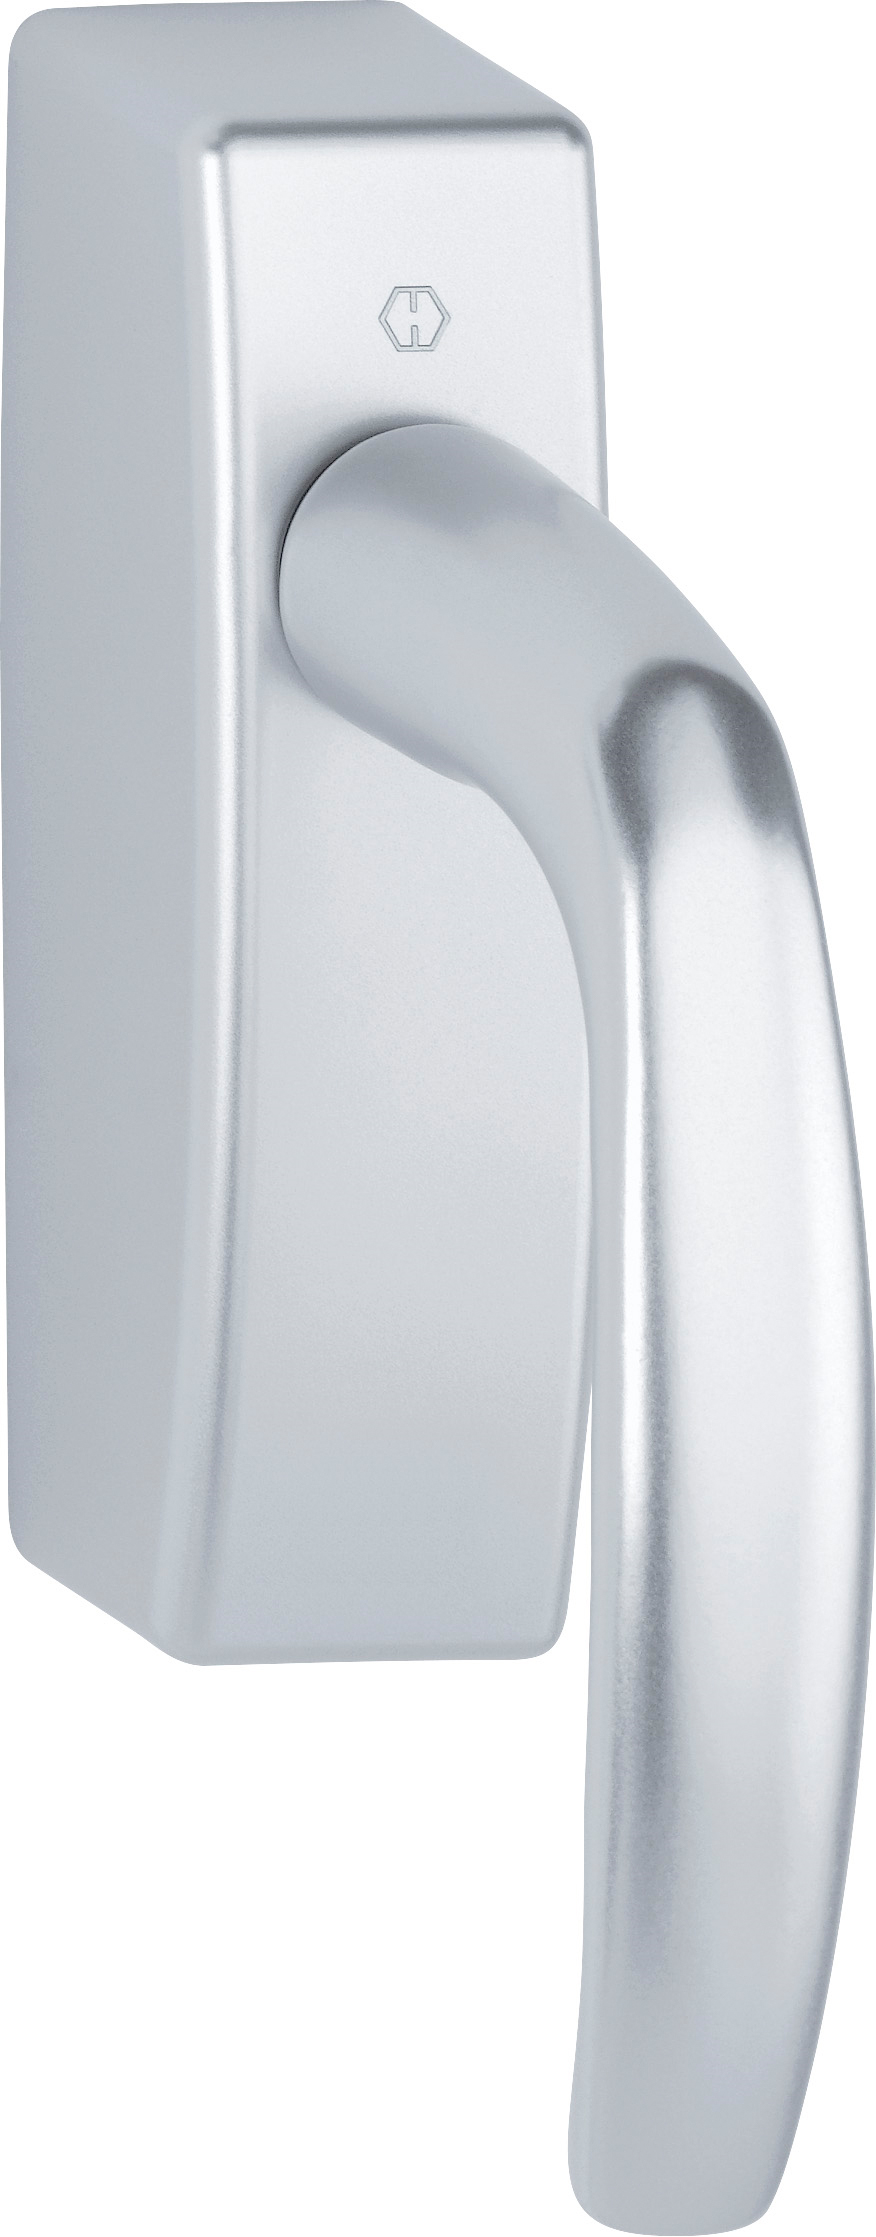 OPUS eWindow handgreep Atlanta aluminium zilver, 24 mm pin, bidirectioneel